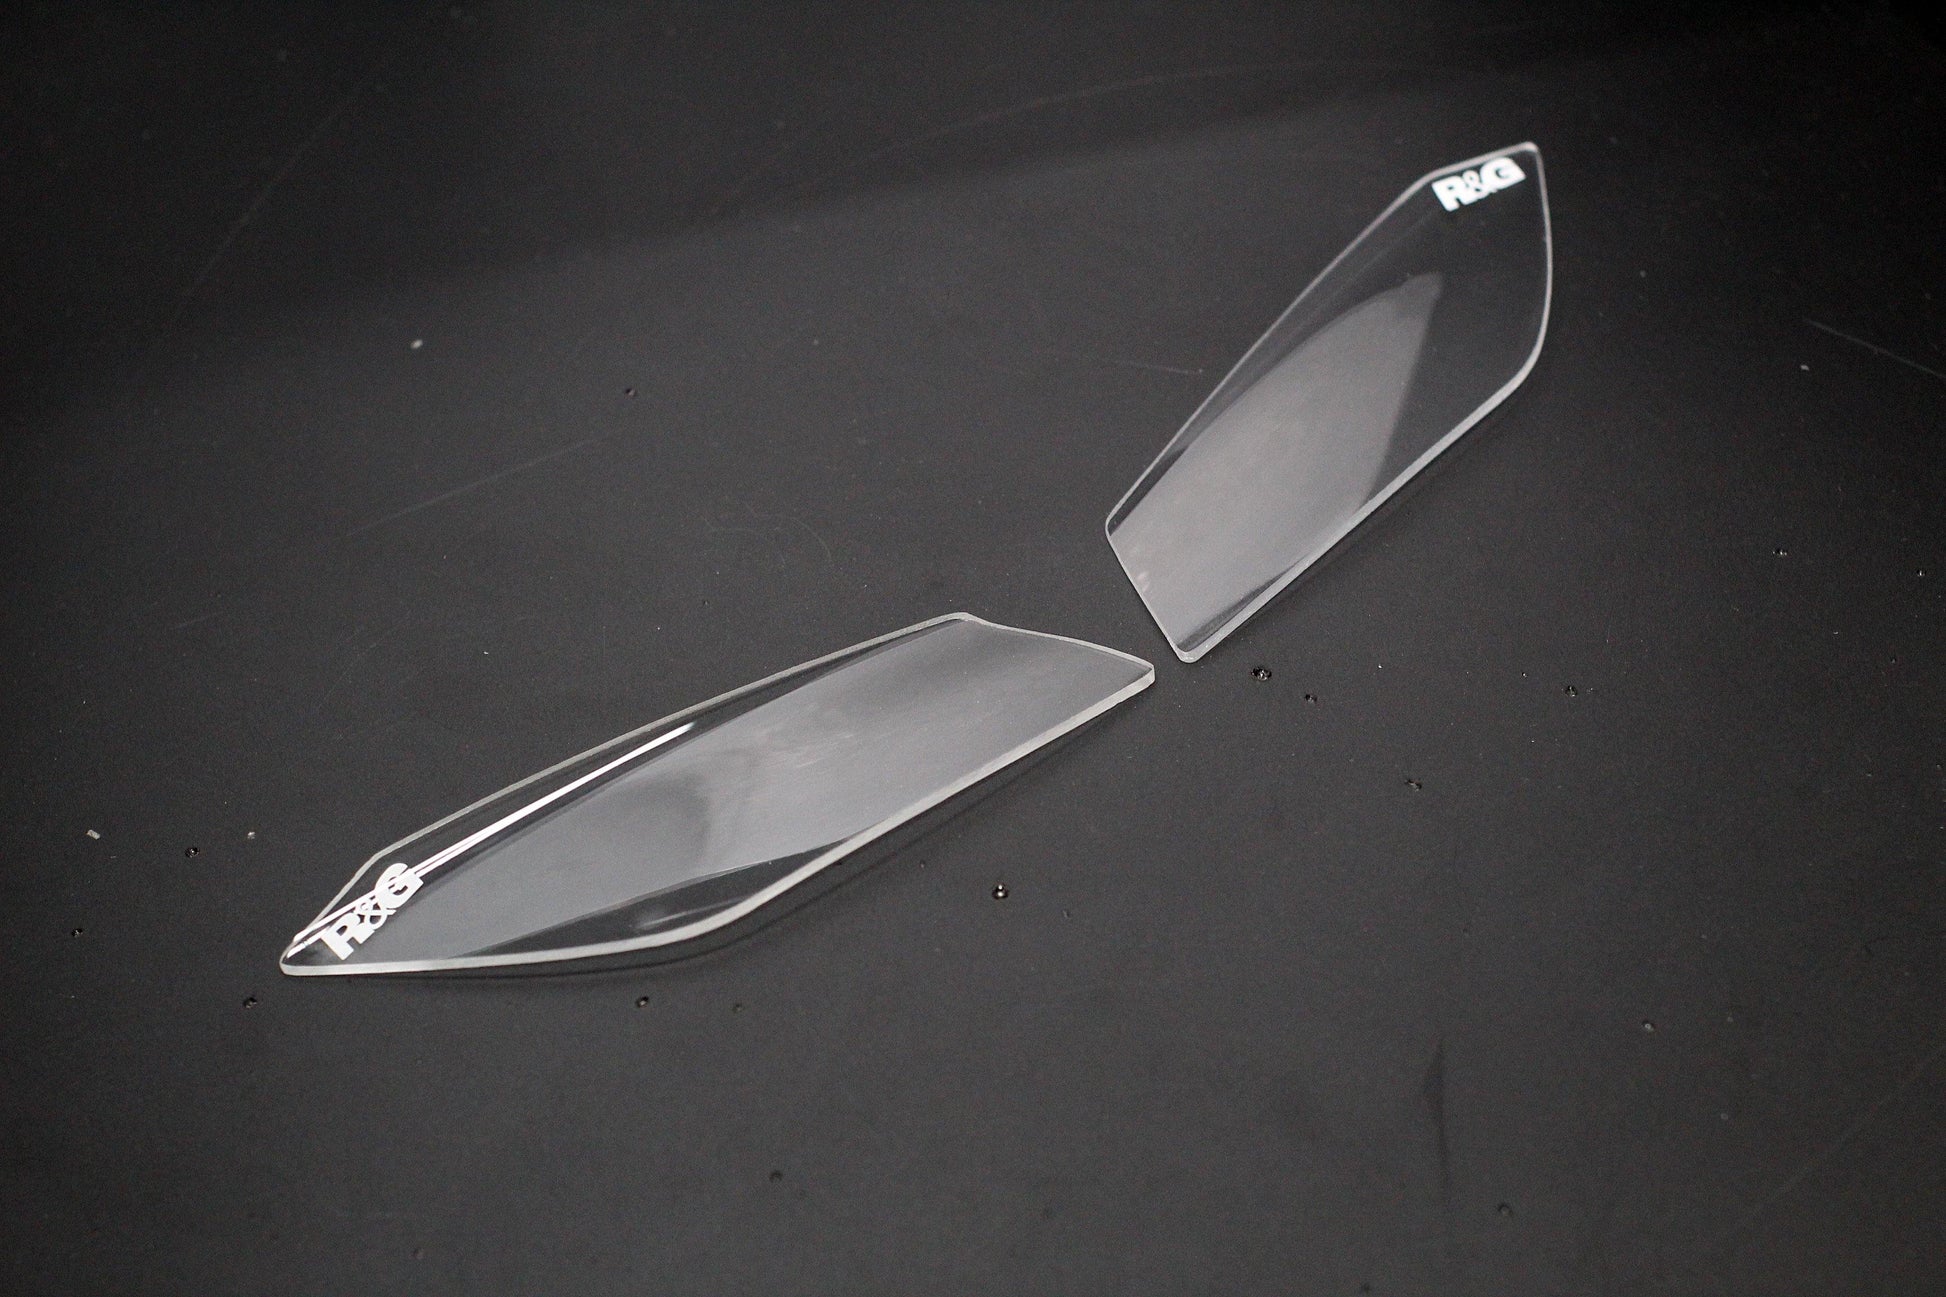 R&G Headlight Shields fits for Yamaha MT-09 ('17-) / SP ('18-) (FZ-09) - Durian Bikers